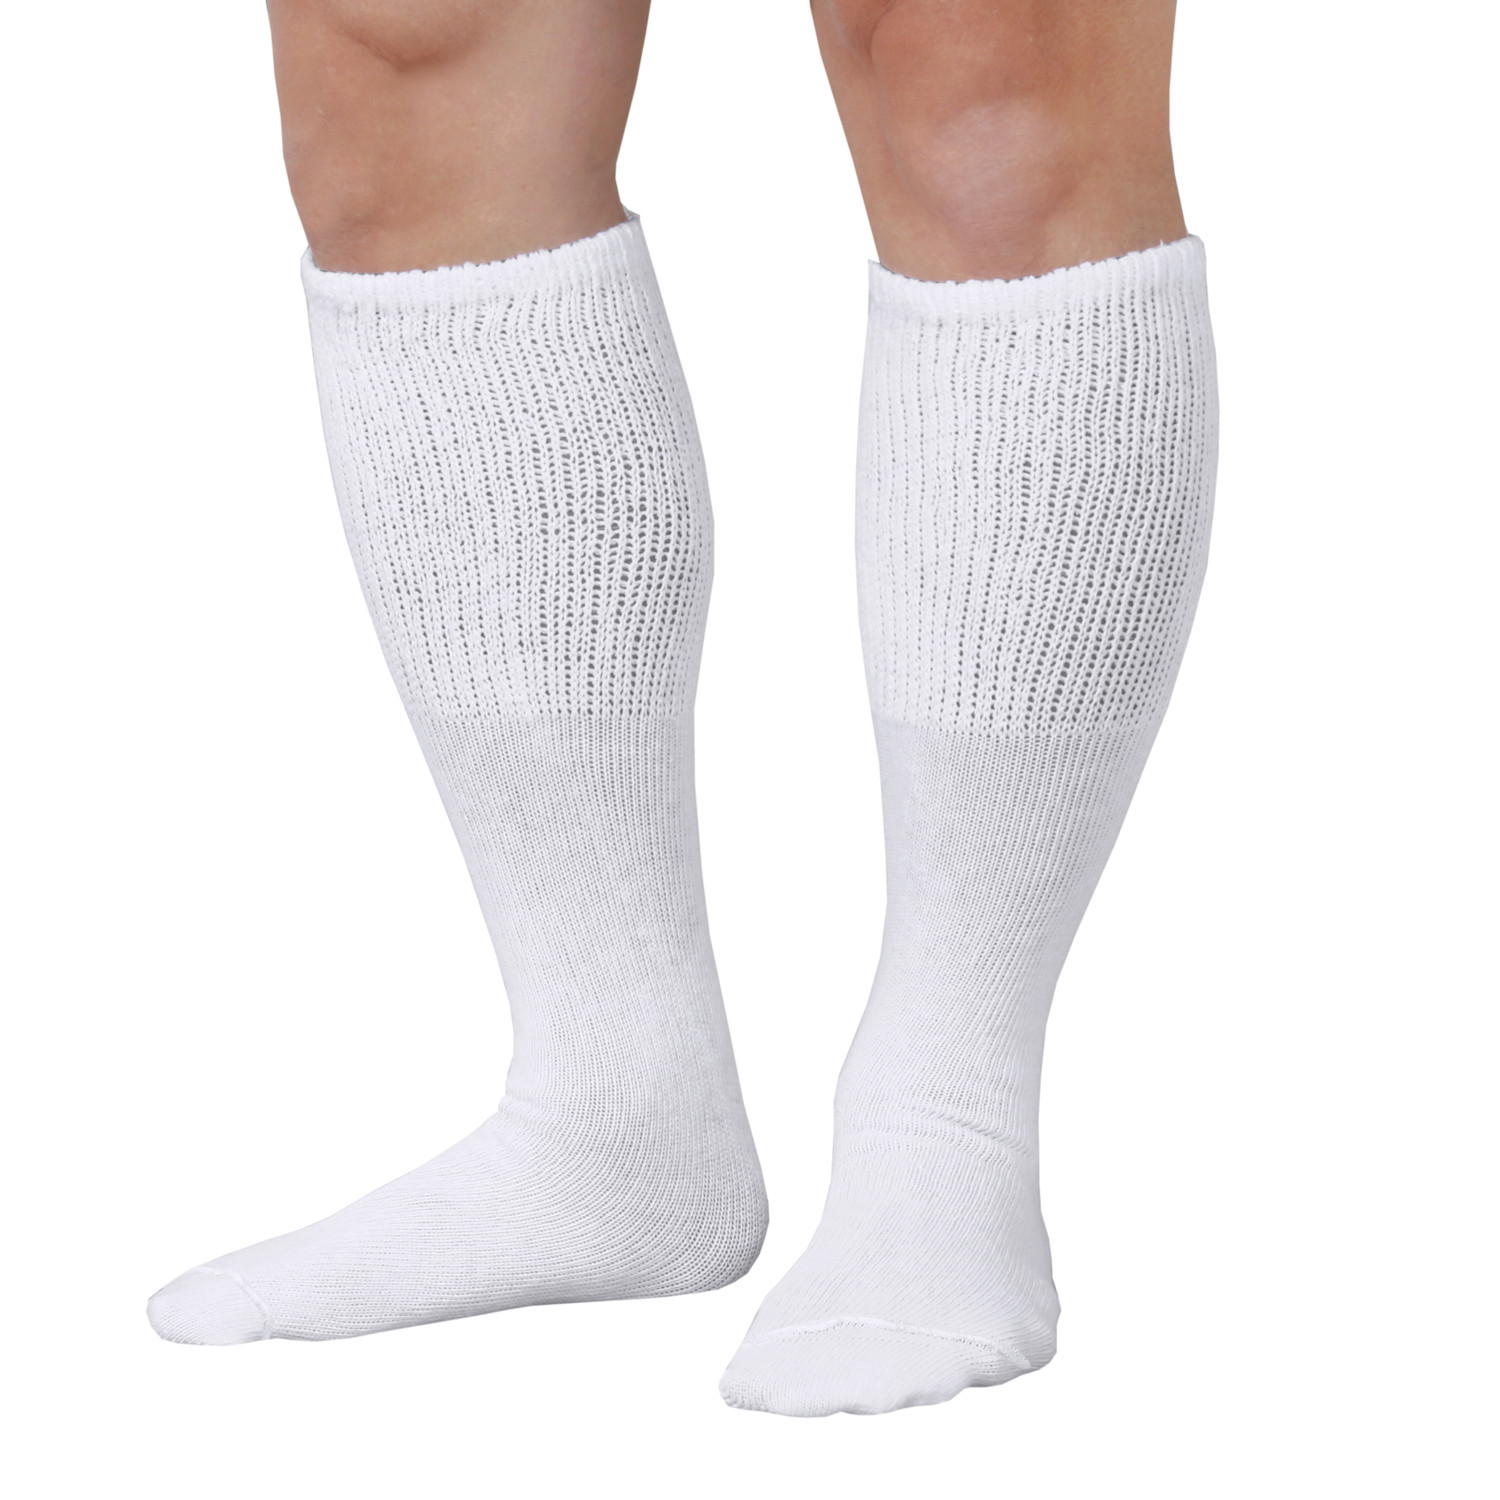 Men's Extra Wide Calf Diabetic Knee High Socks - 3 Pairs | Support Plus